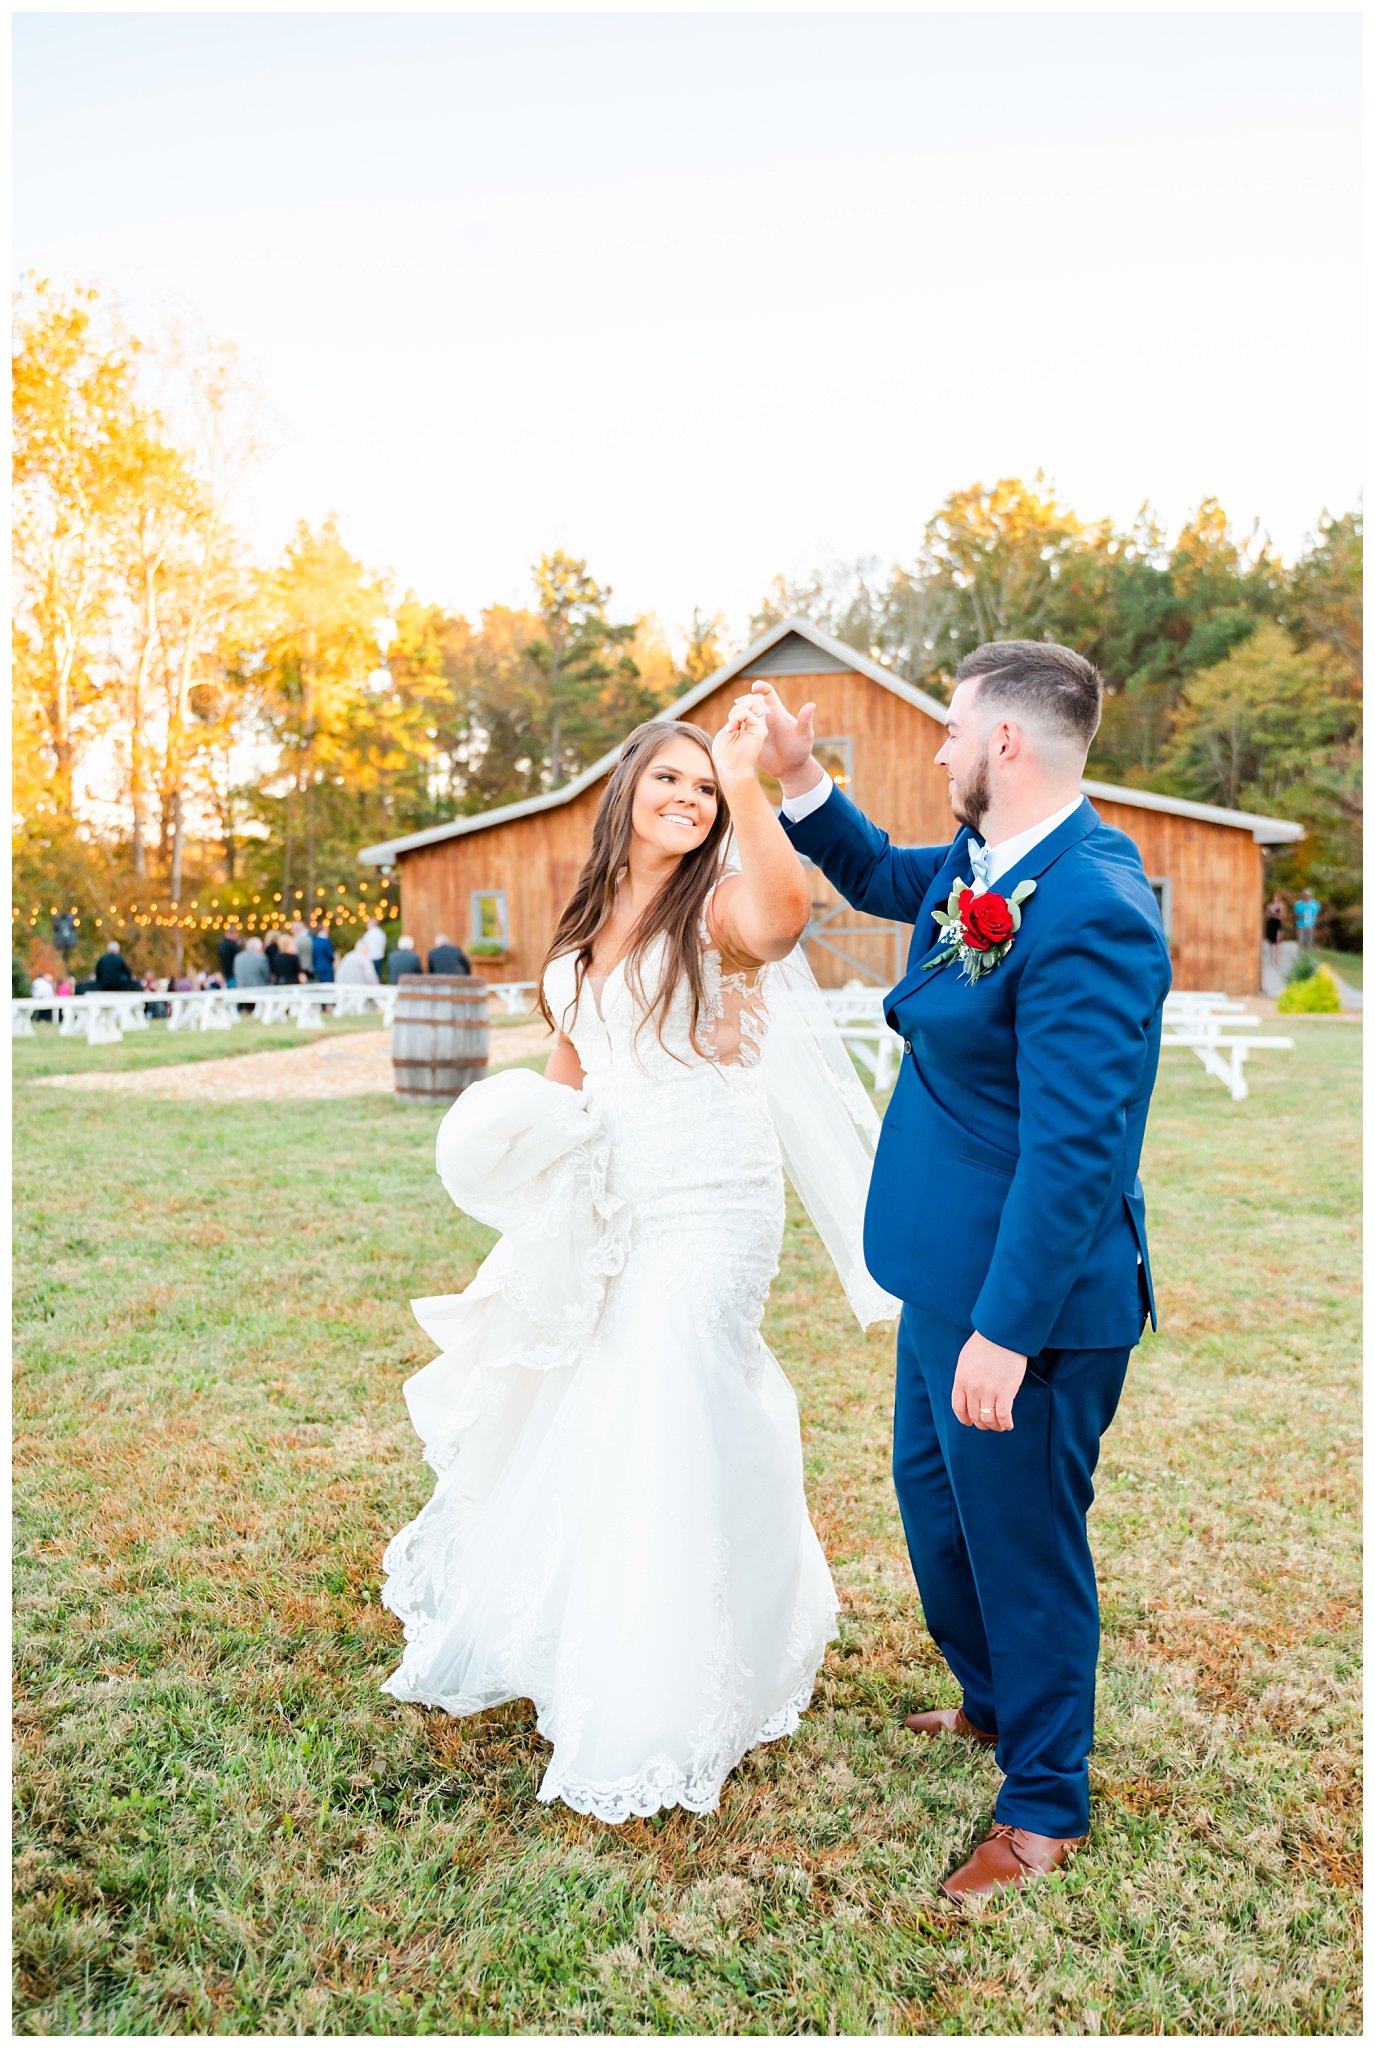 North Carolina wedding photographer captures bride and groom outdoor portrait